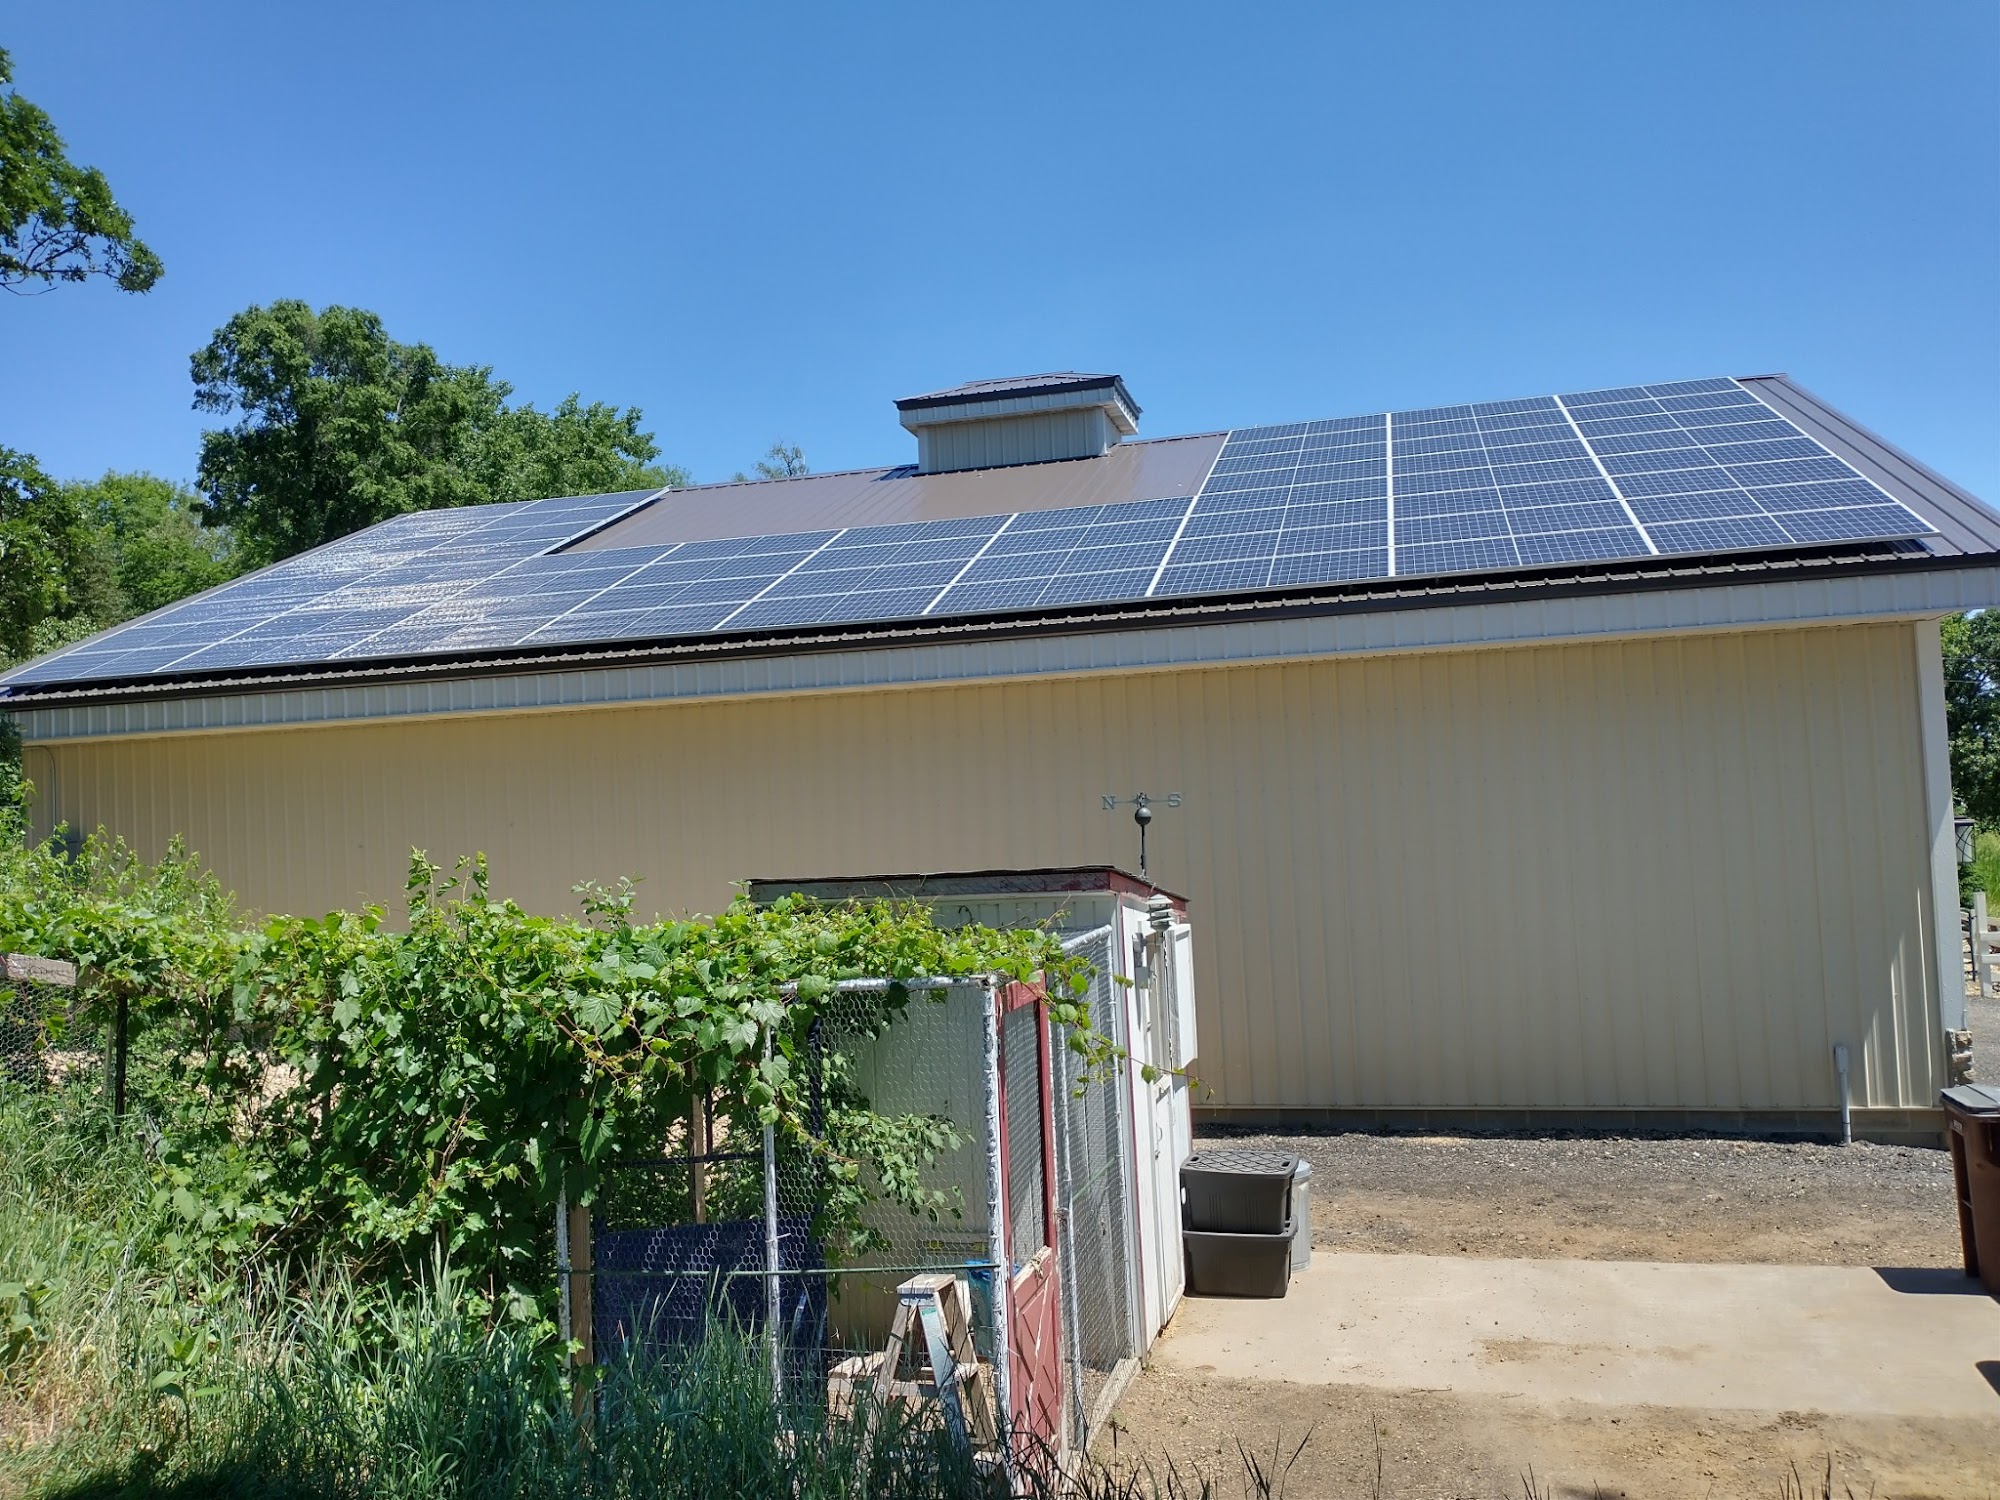 Champion Solar 7010 US-61, Minnesota City Minnesota 55959